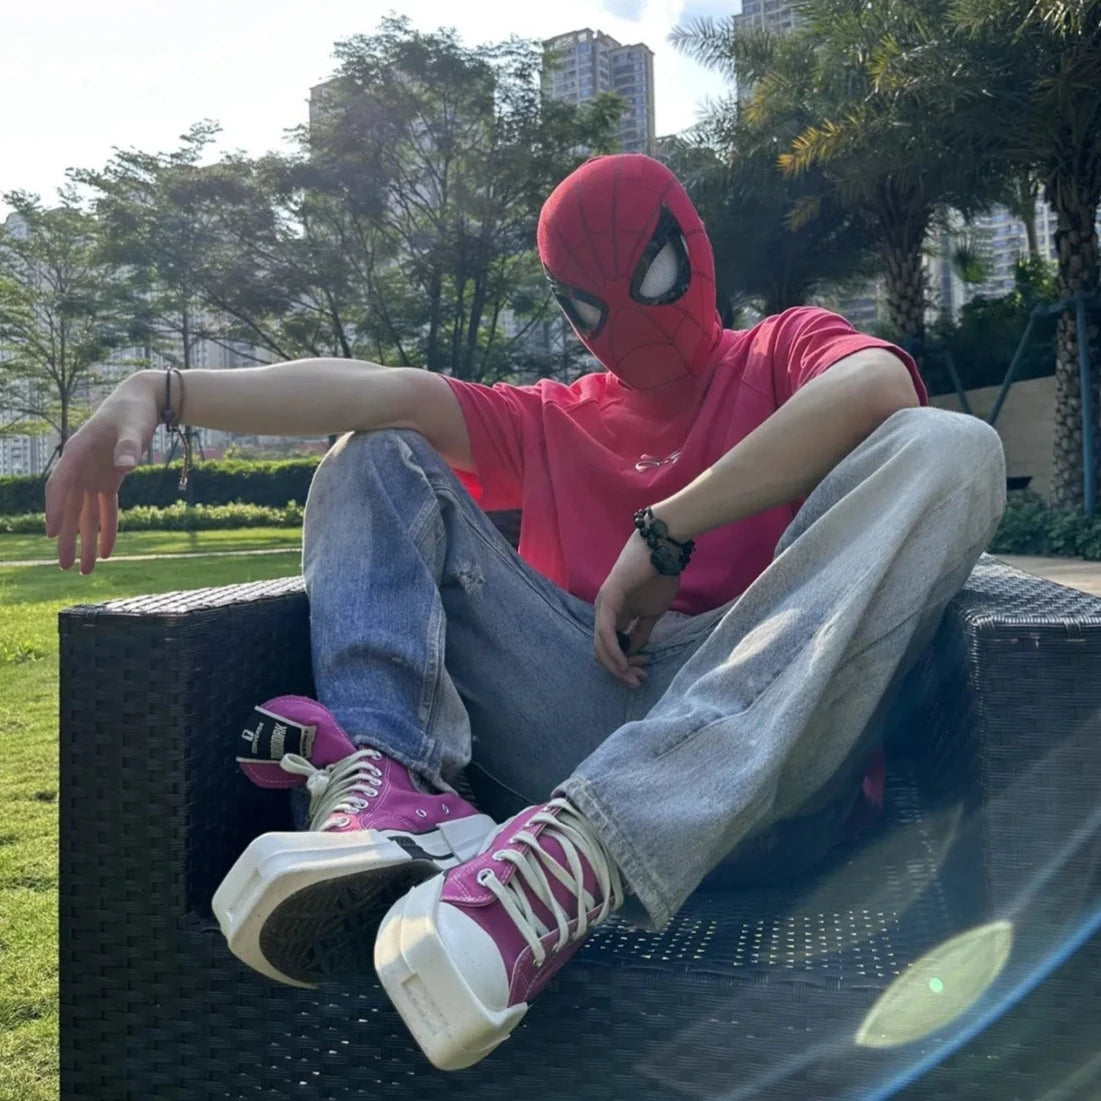 Spiderman Mask + LiDAR = Superpowers! (Real Life Spidey-Sense!) 